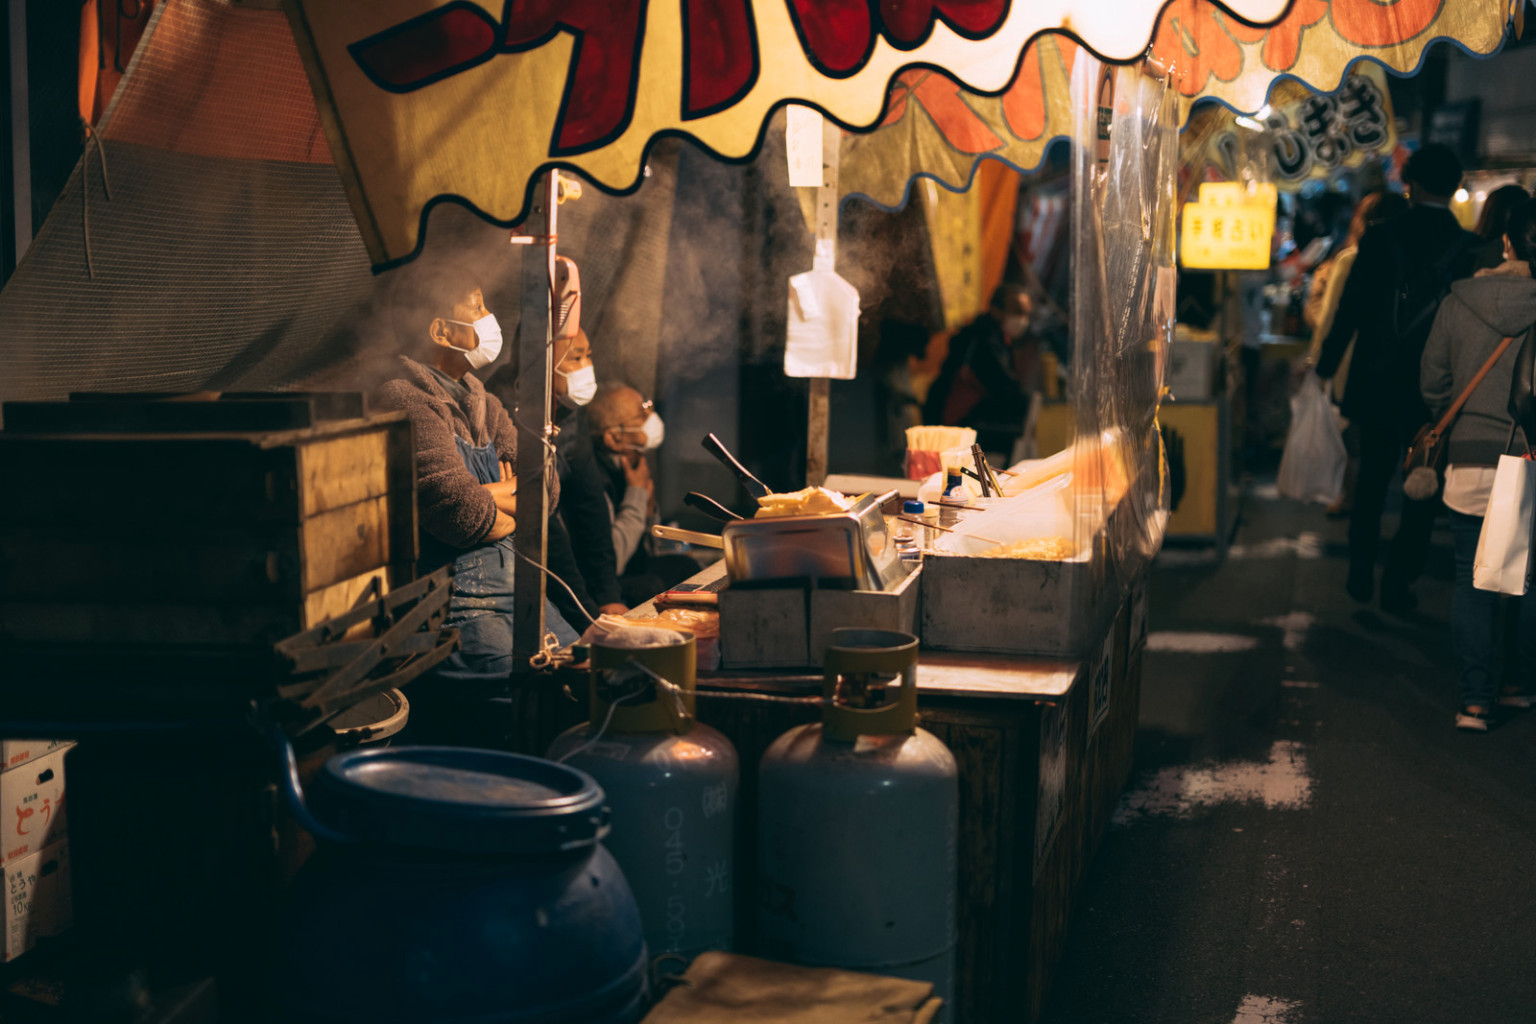 Where Yakuzas Wander: Visiting The Most Wanted Streets Of Tokyo